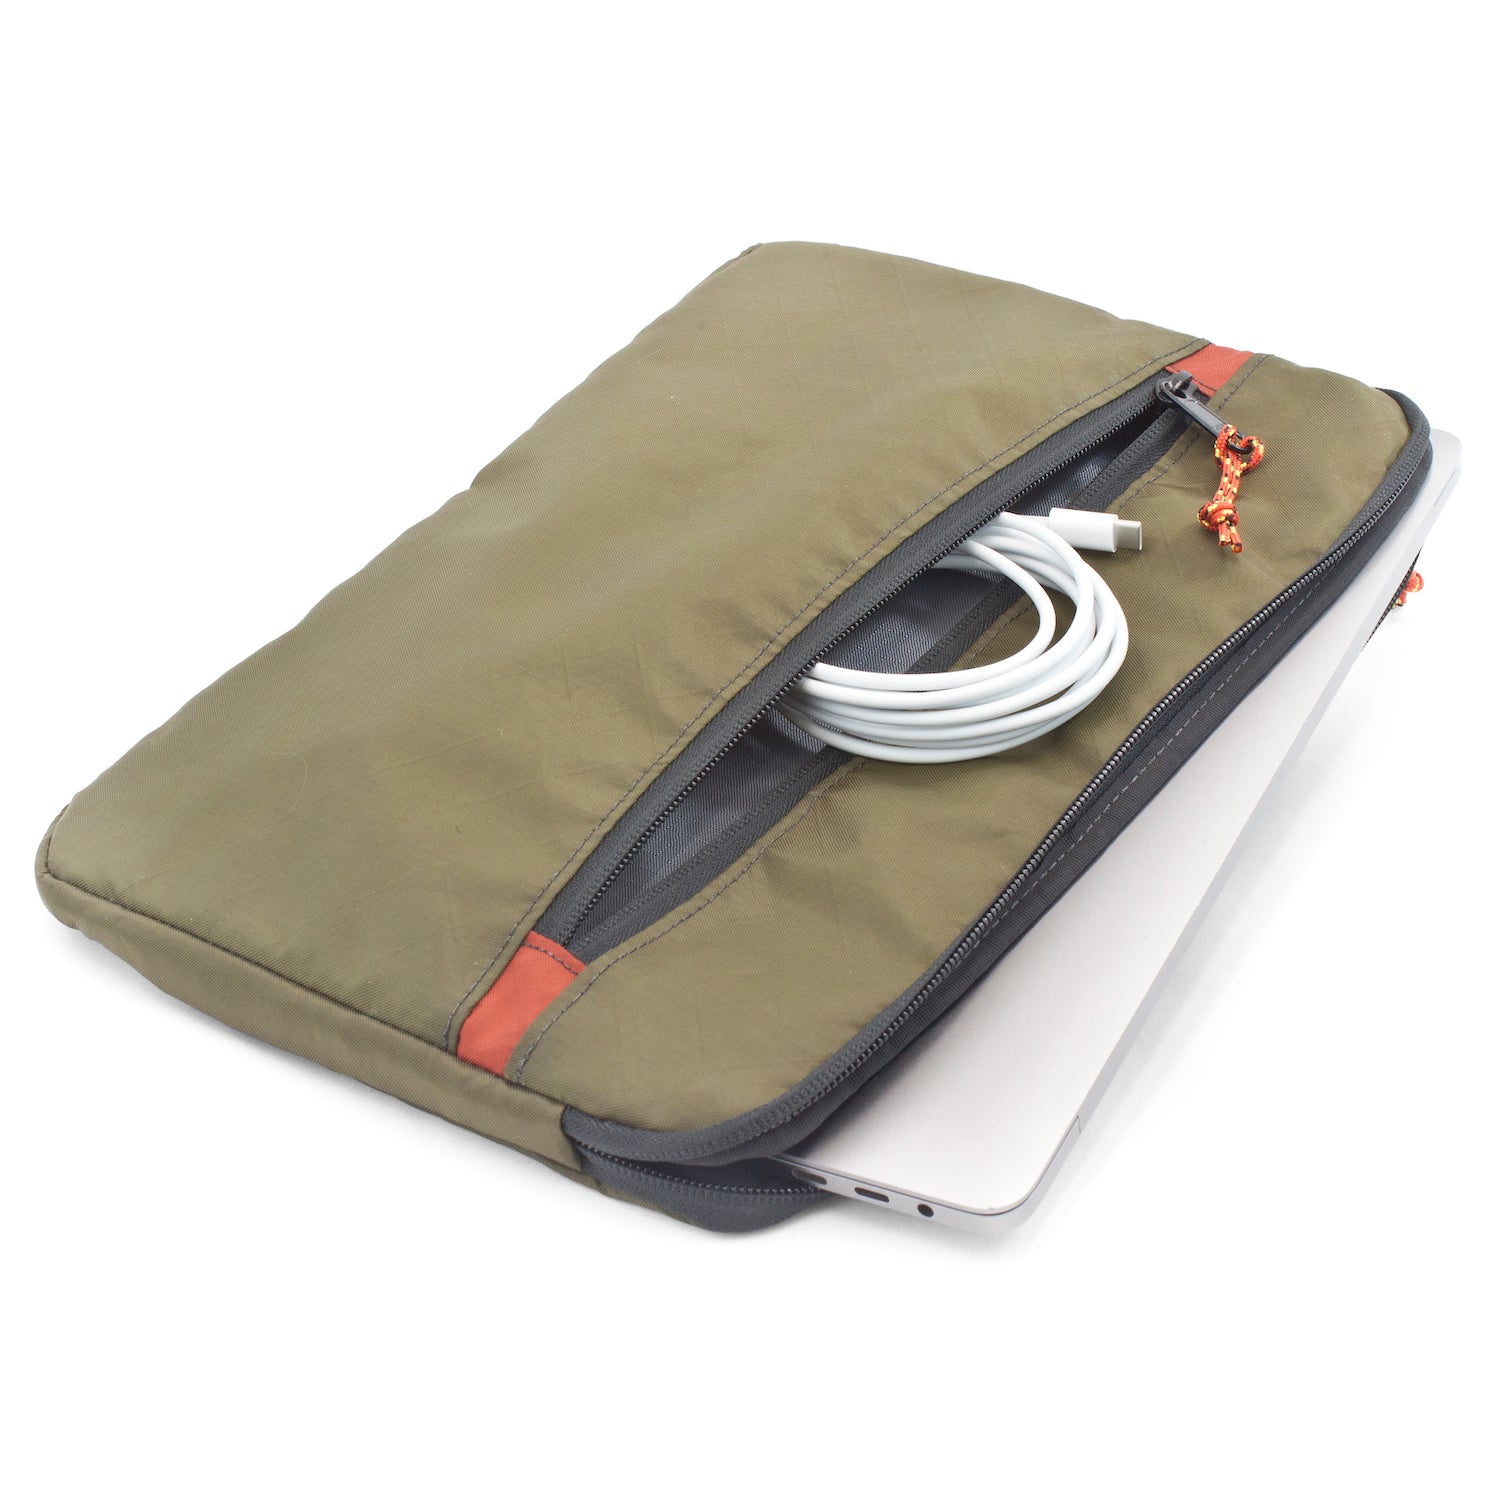 Airbag MacBook 2-in-1 sleeve / bag for Macbook Pro 15 inch - Geeektech.com